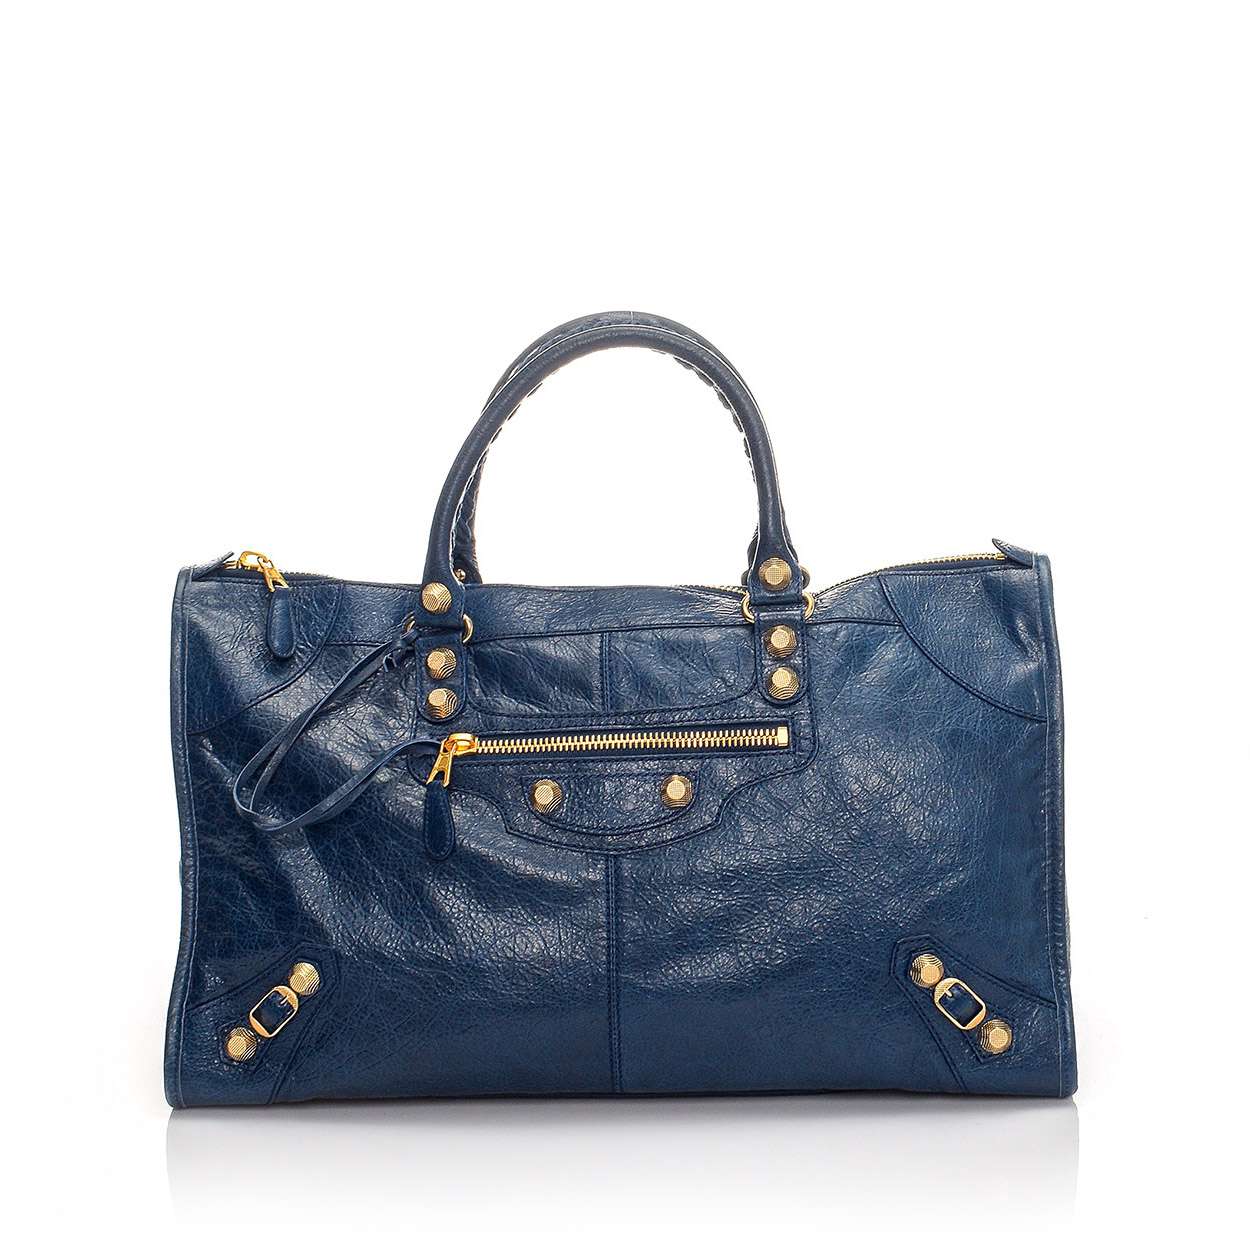 Balenciaga - Navy Blue Lambskin Leather Giant Work Bag